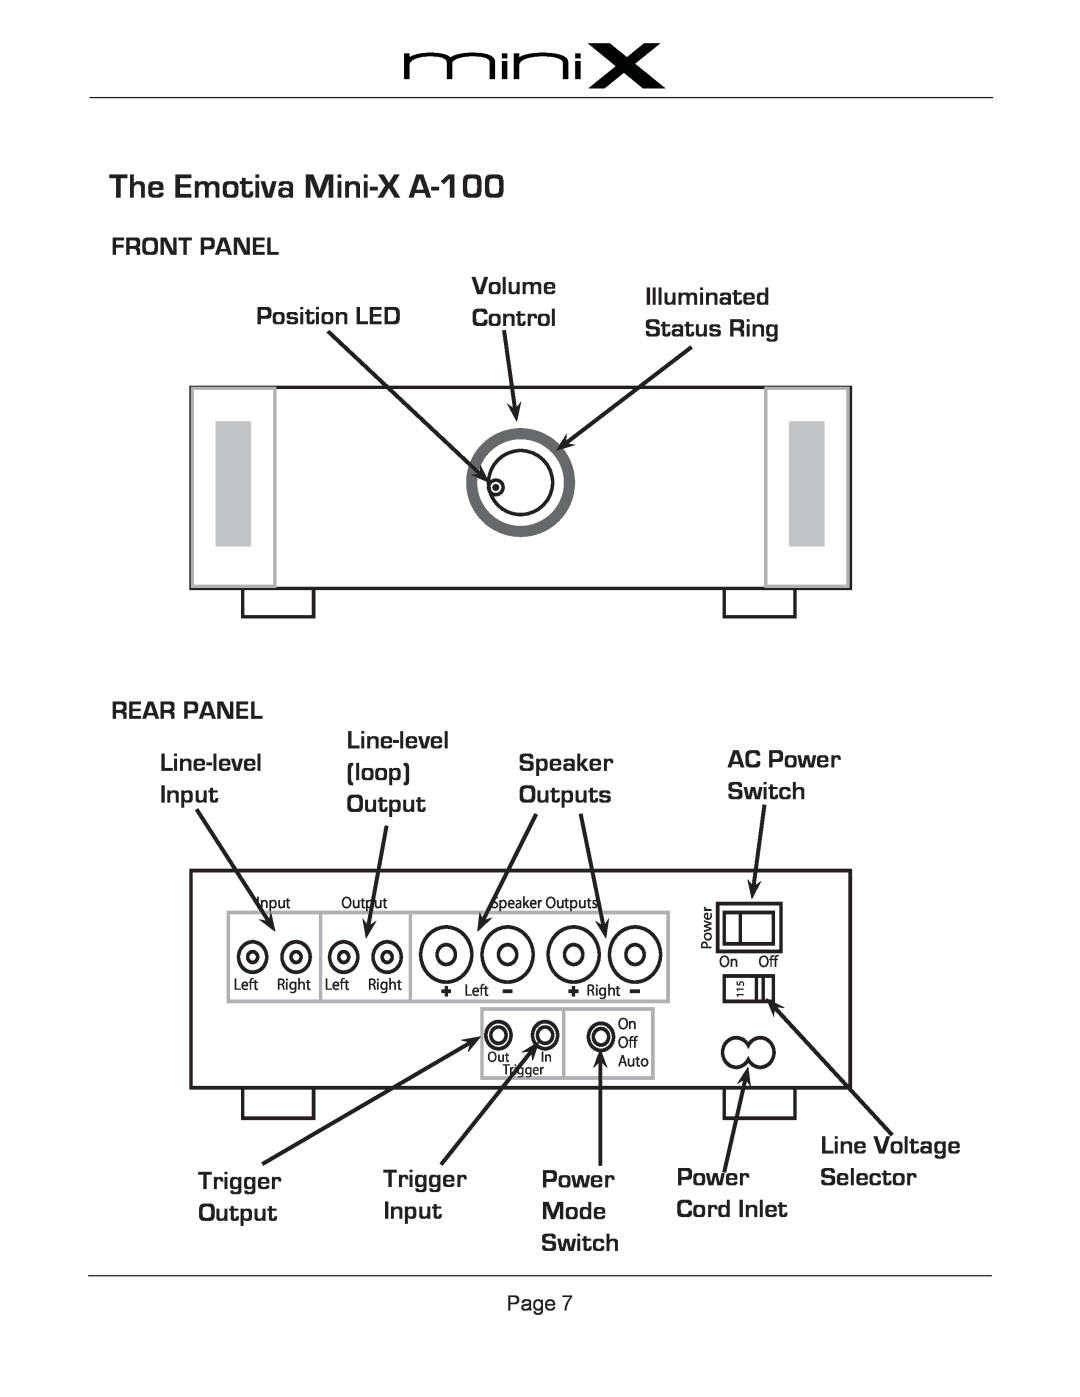 Emotiva user manual The Emotiva Mini-X A-100 